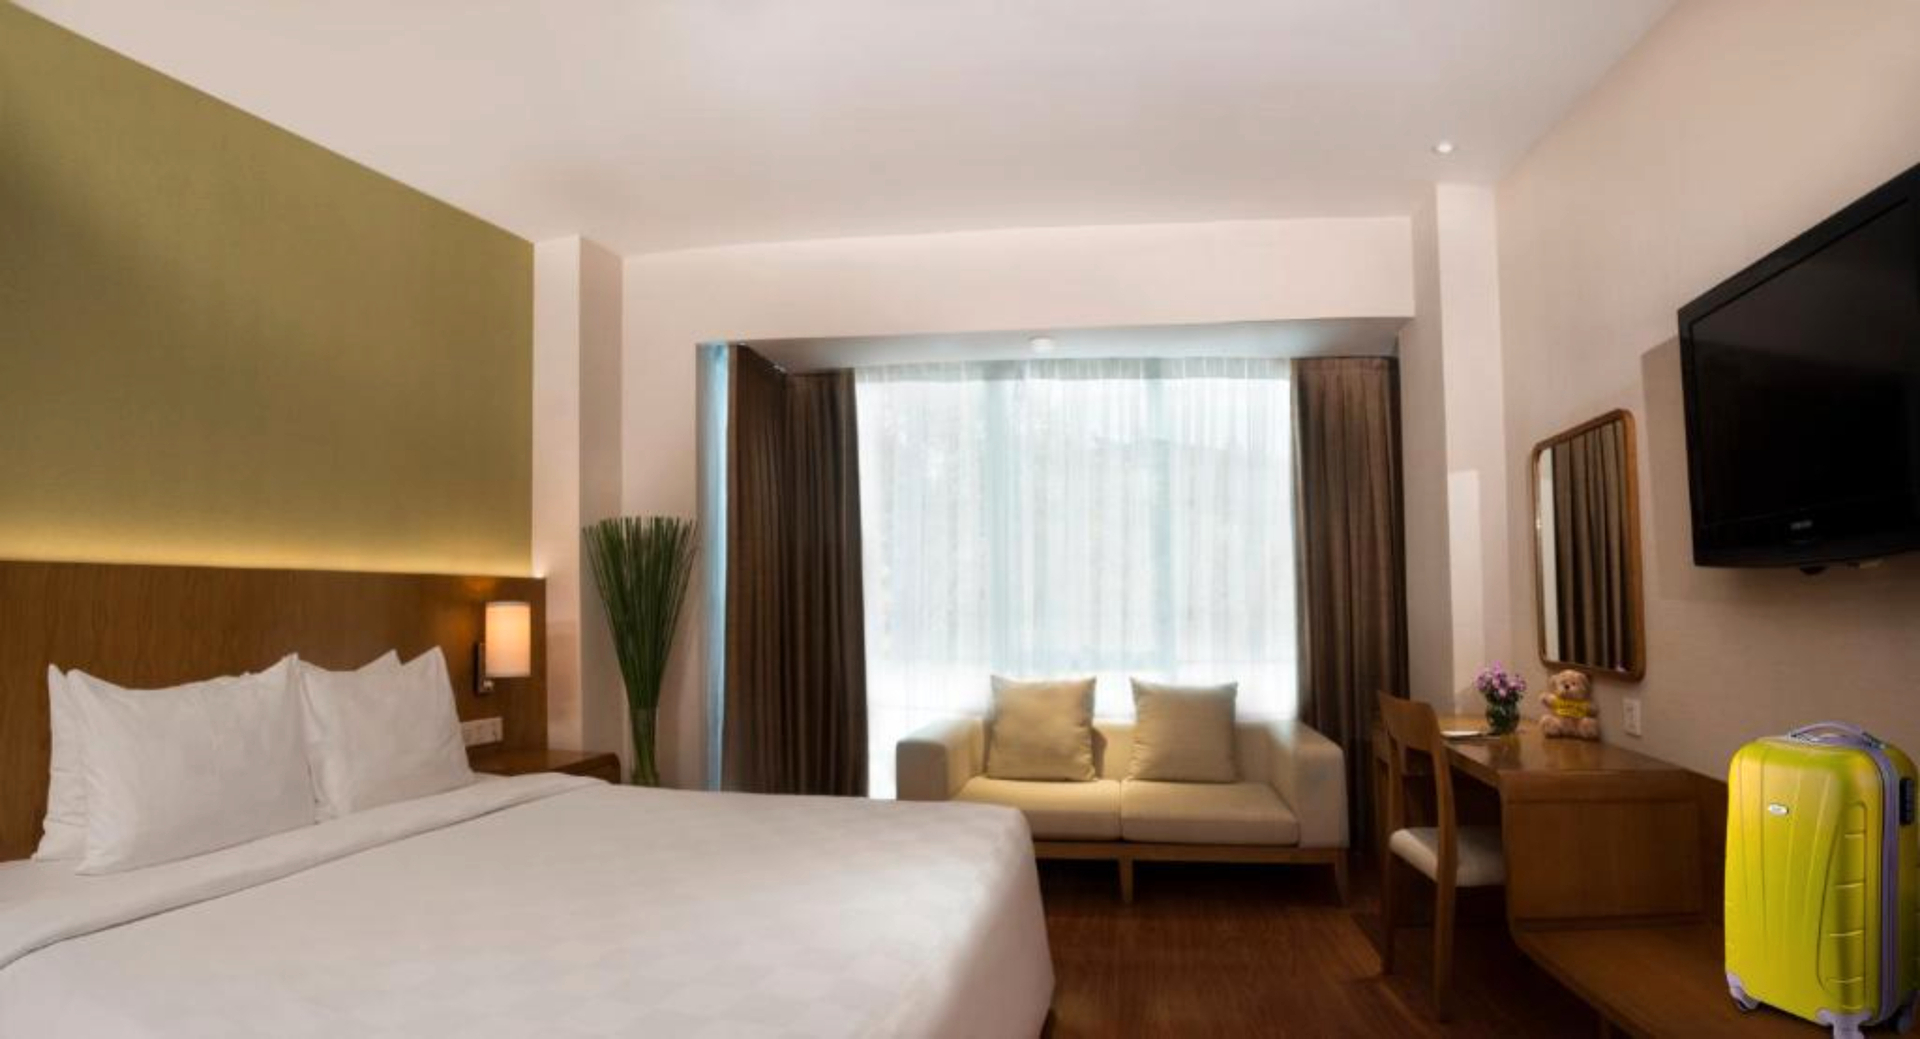 Bedroom 3, Harmony Saigon Hotel & Spa, Quận 1